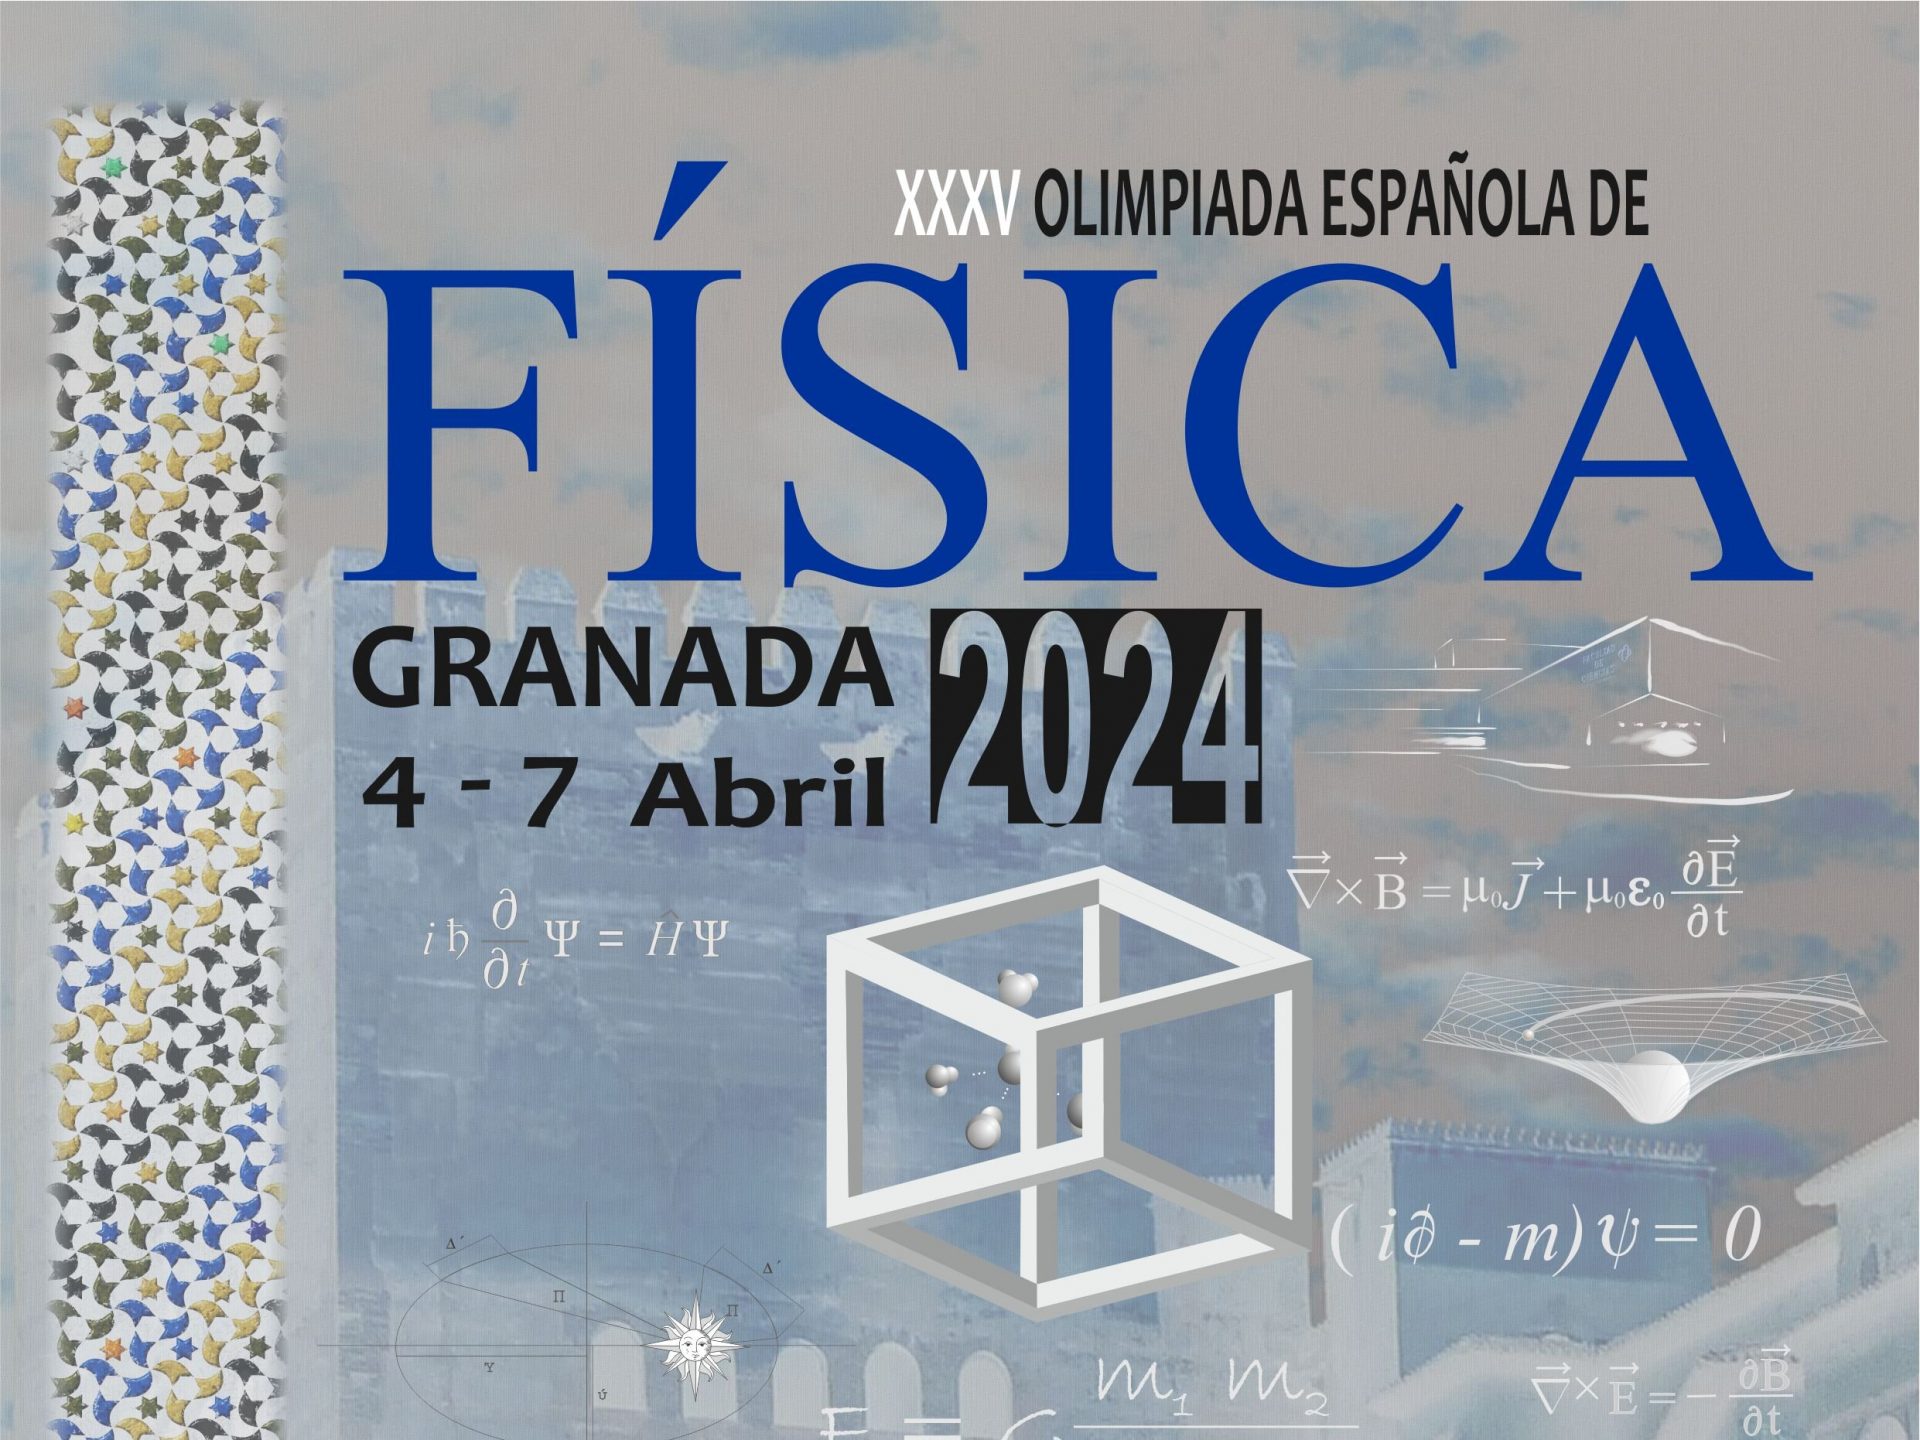 University of Granada headquarters for the 35th Spanish Physics Olympiad